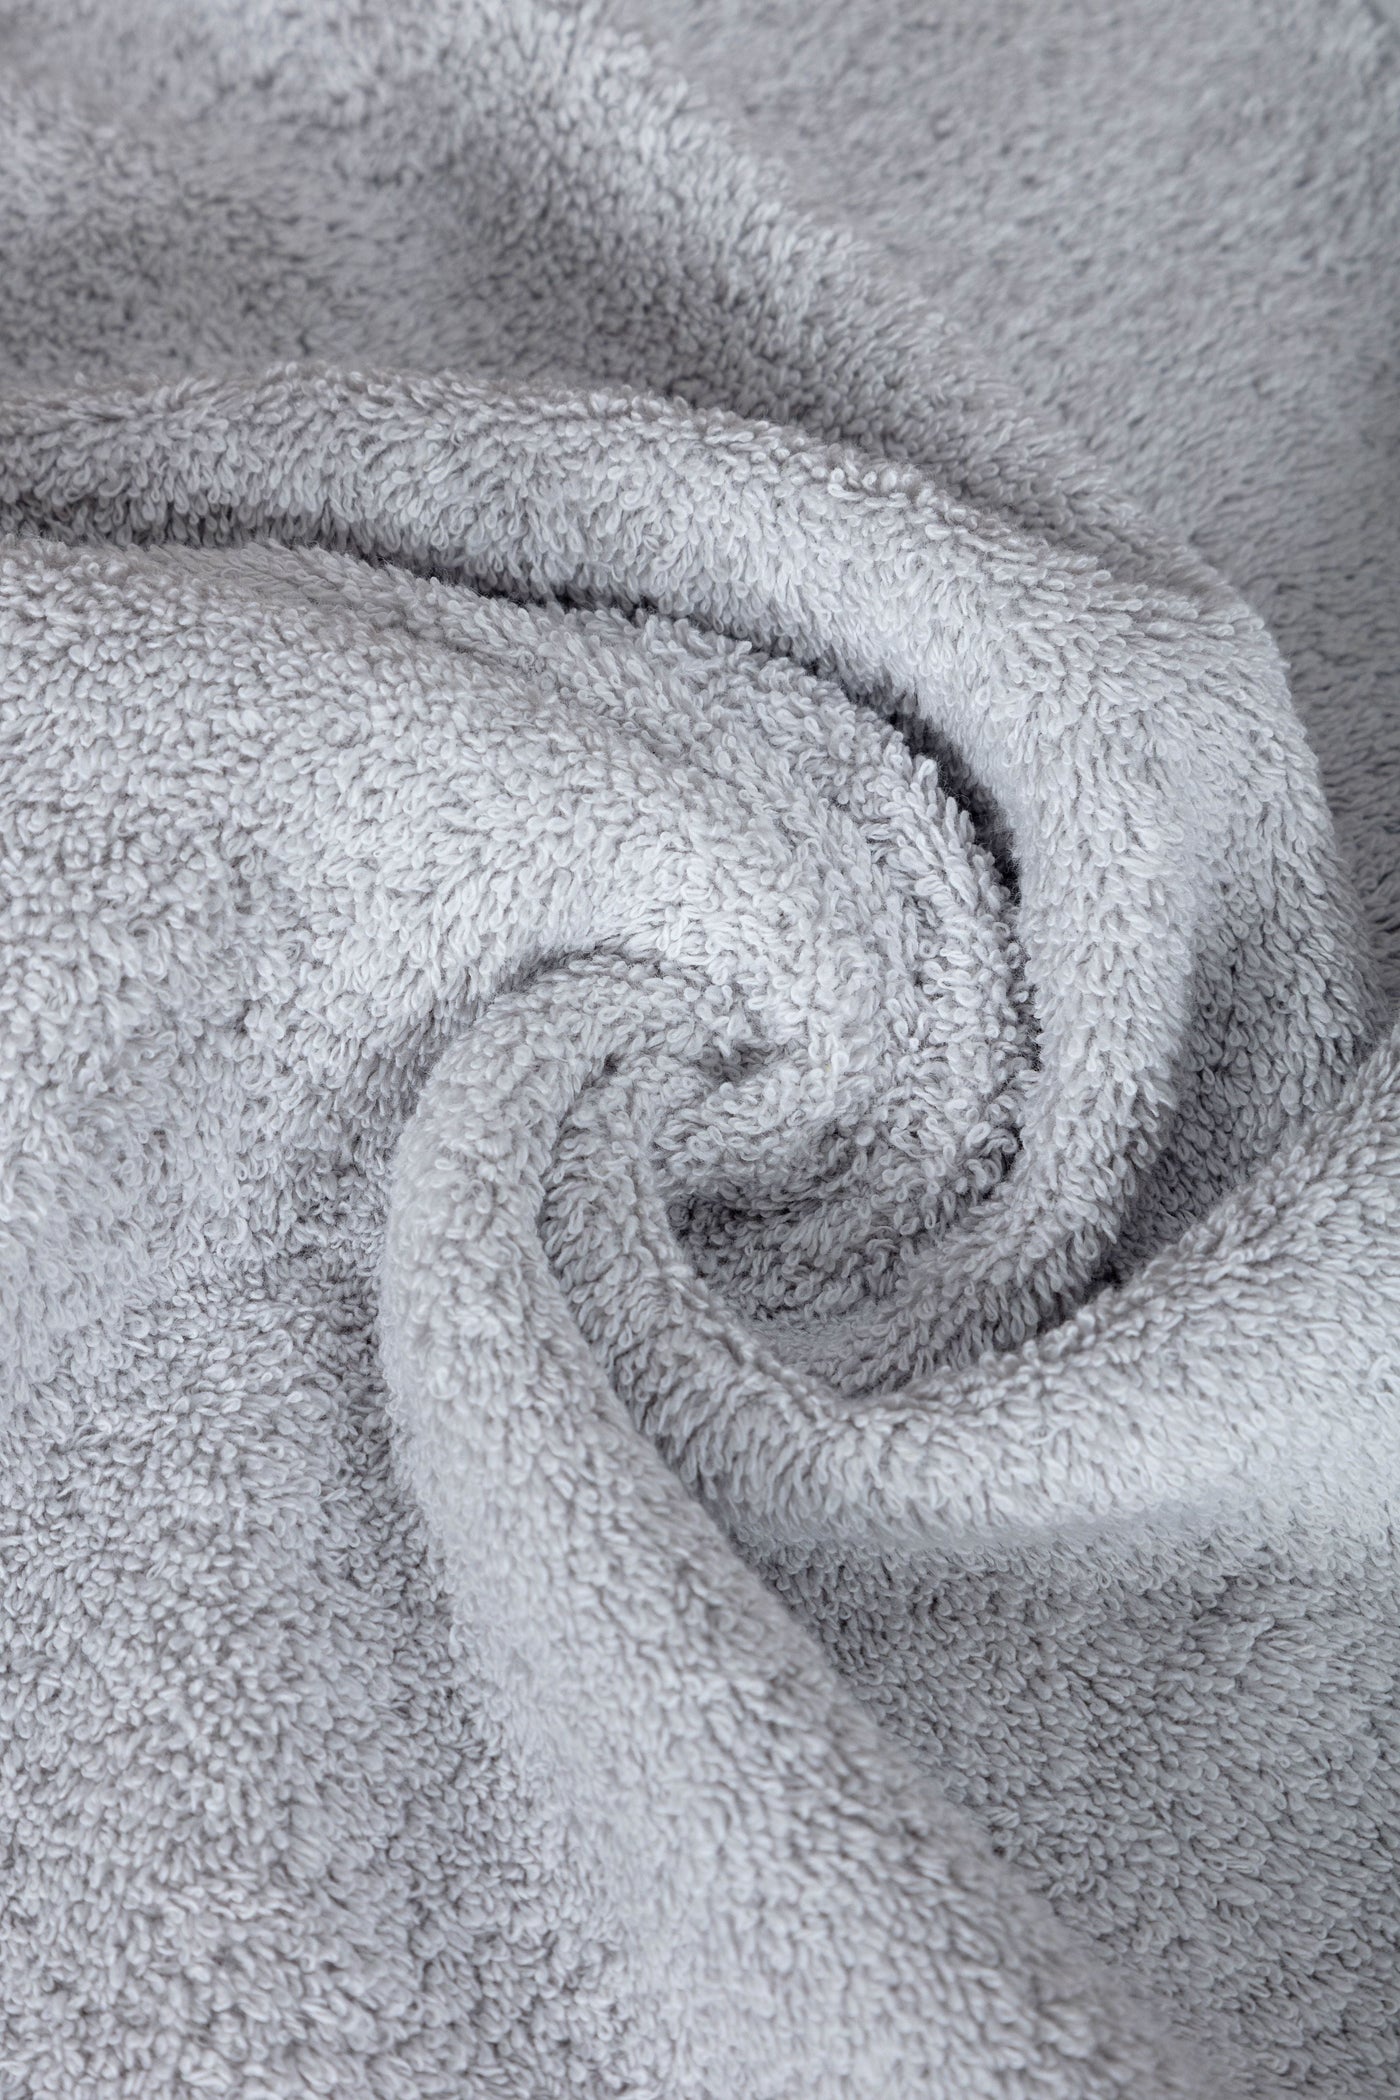 Turkish Cotton Bath Towel Set of 4 by La'Hammam